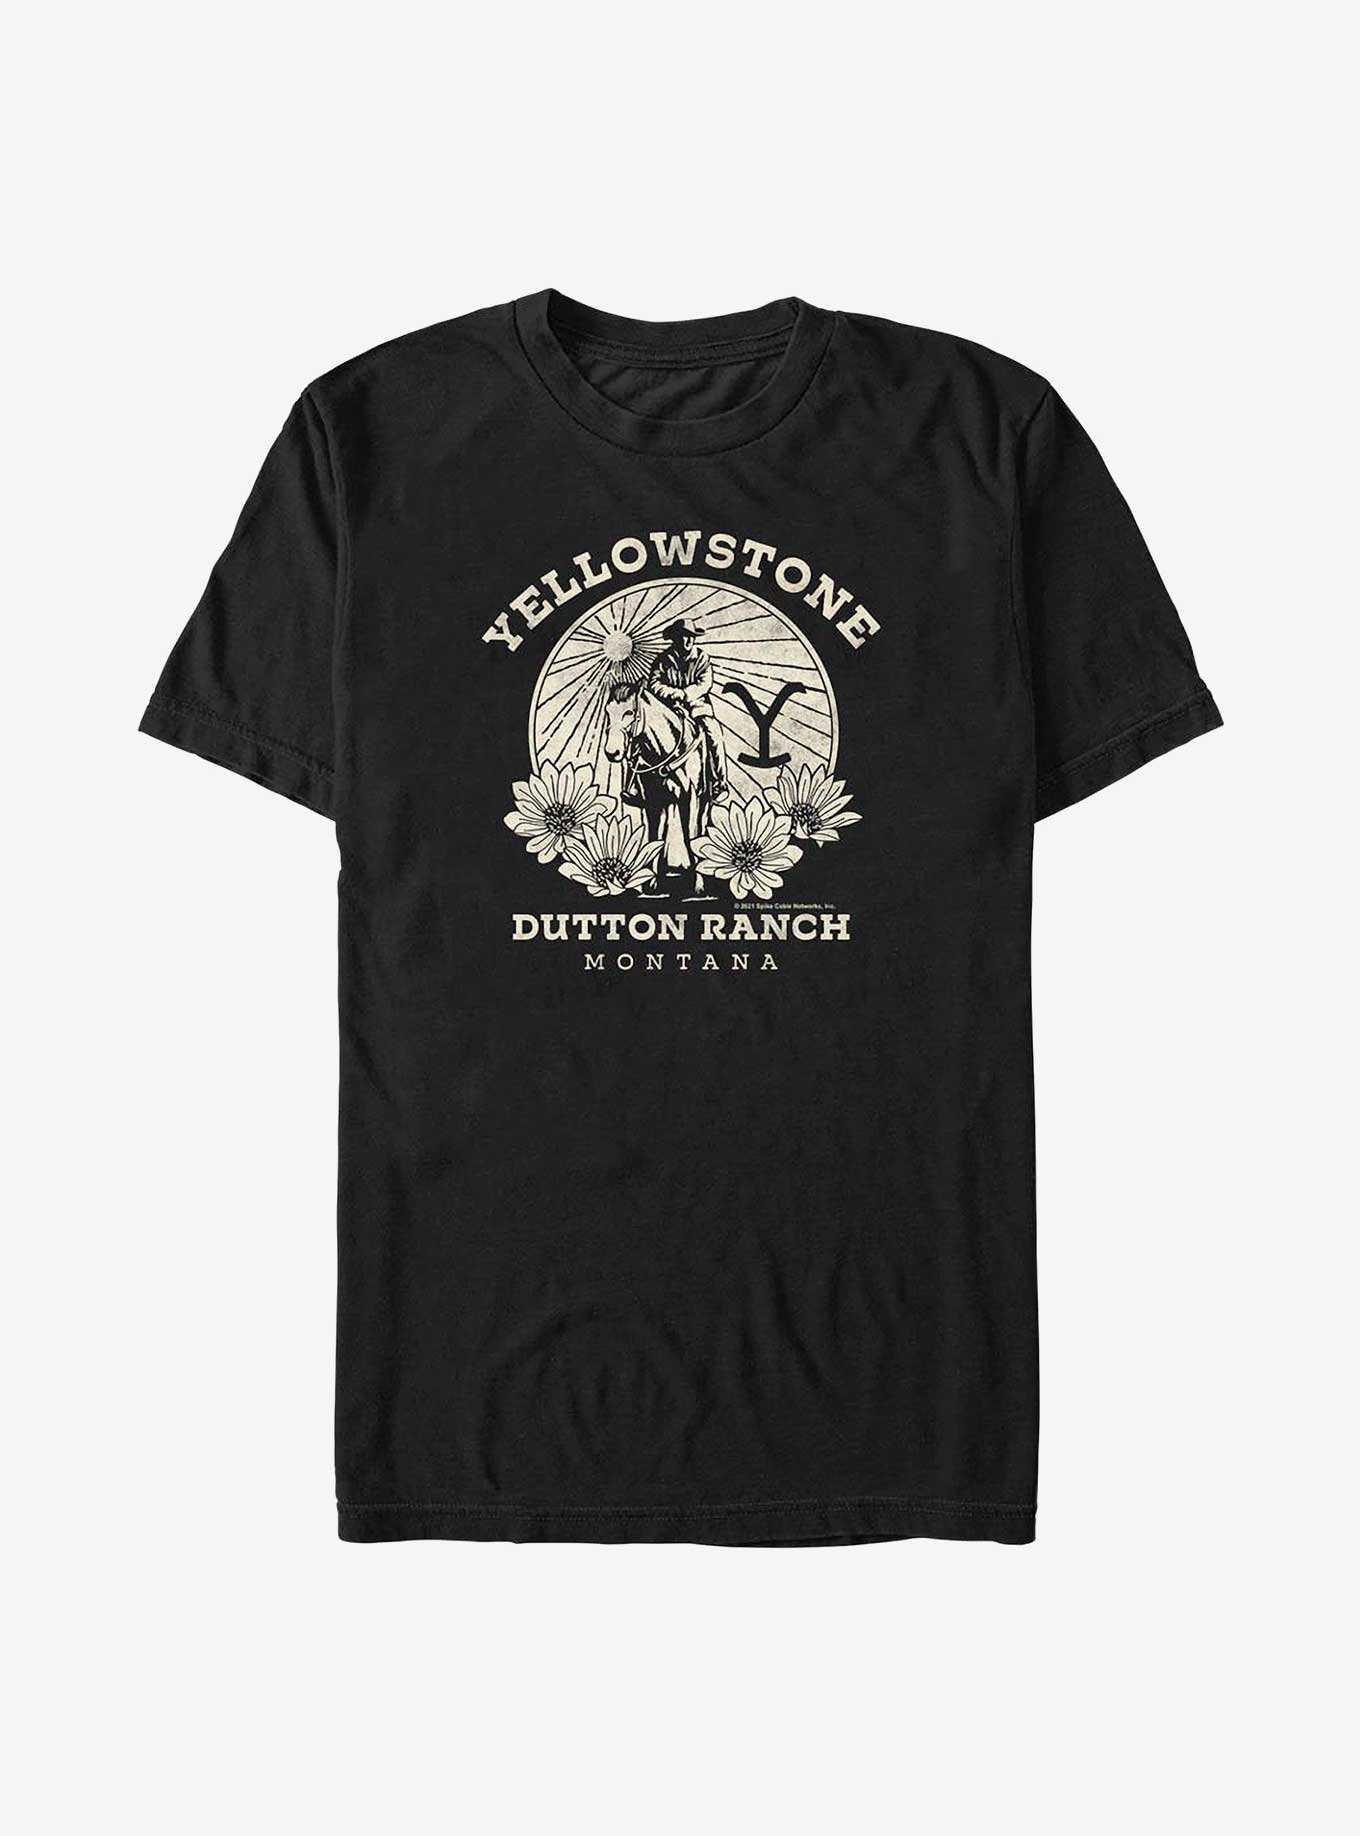 Yellowstone Dutton Ranch Big & Tall T-Shirt, , hi-res